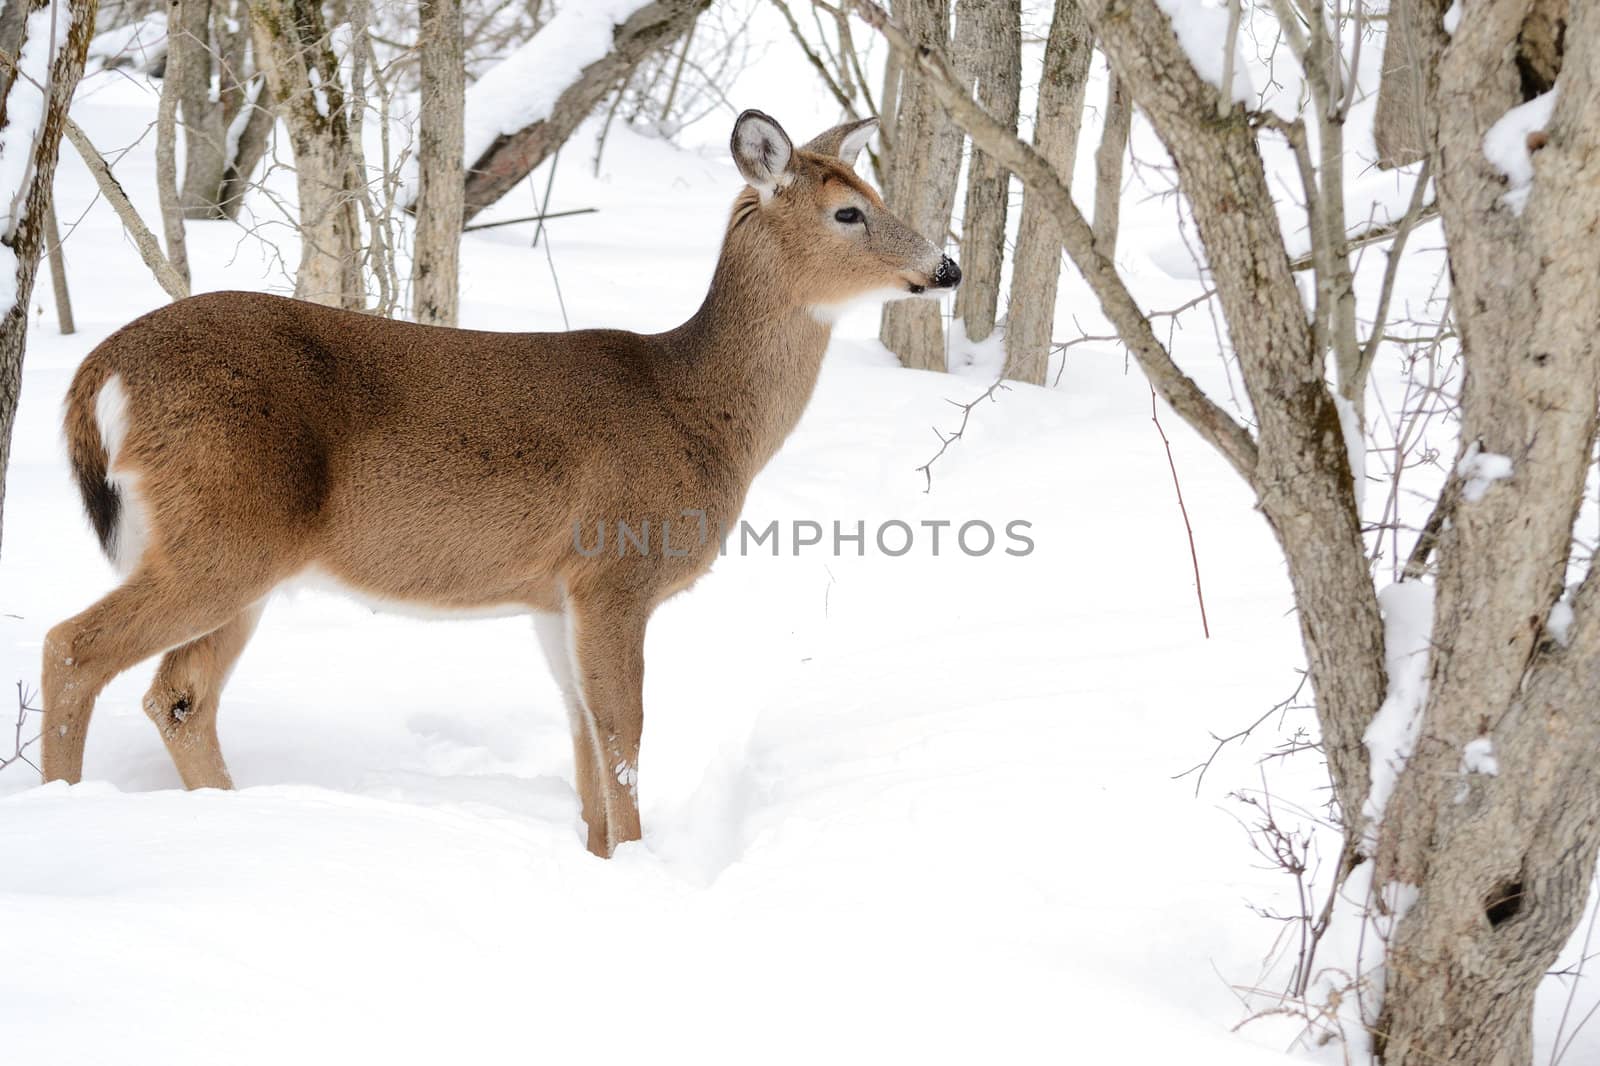 Whitetail deer doe standing in the woods in winter snow.